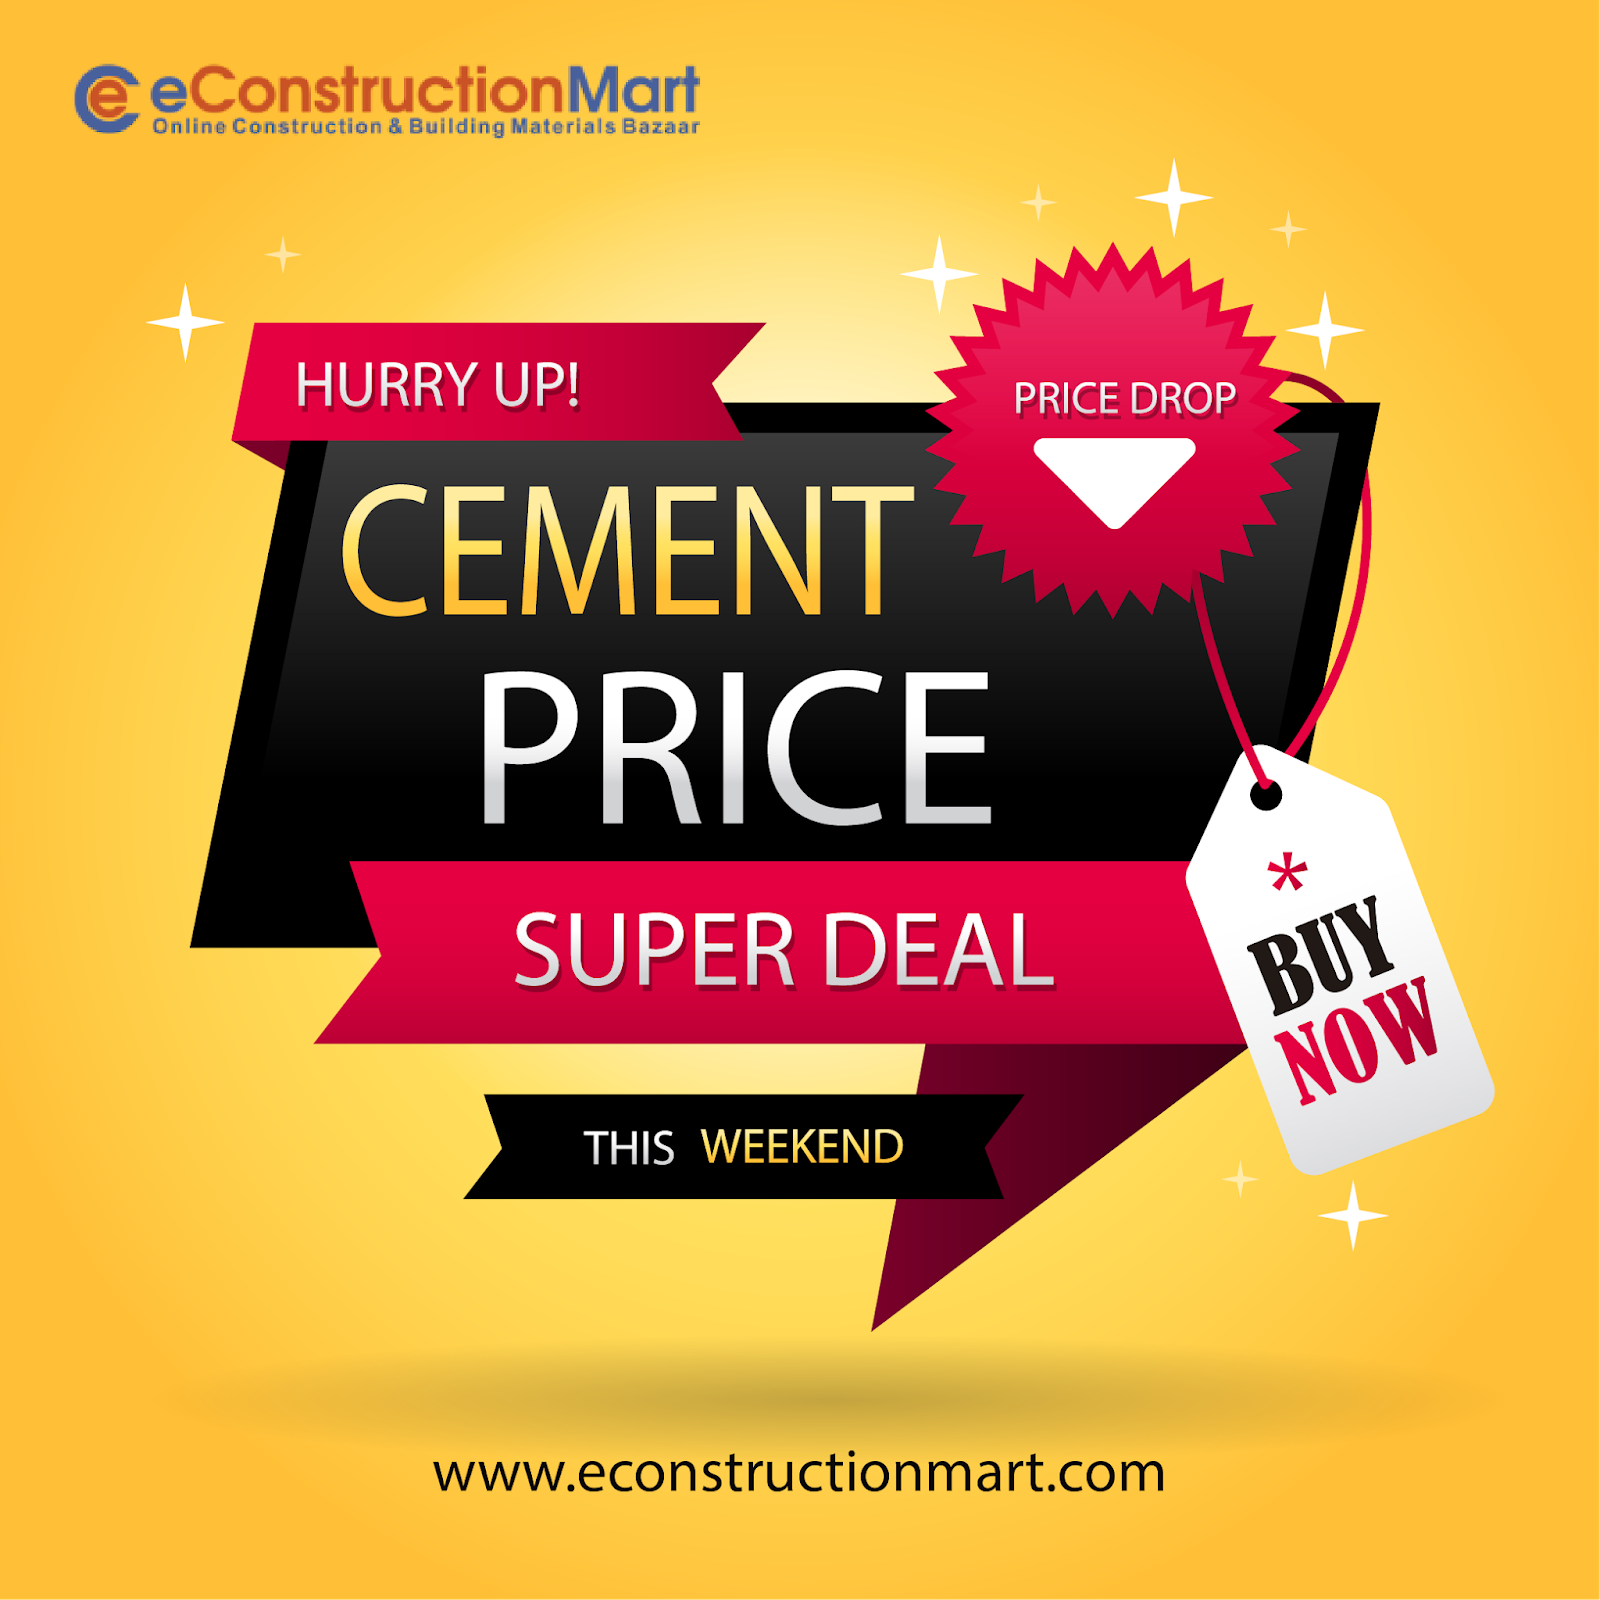 Cement Price Deals at eConstructionMart